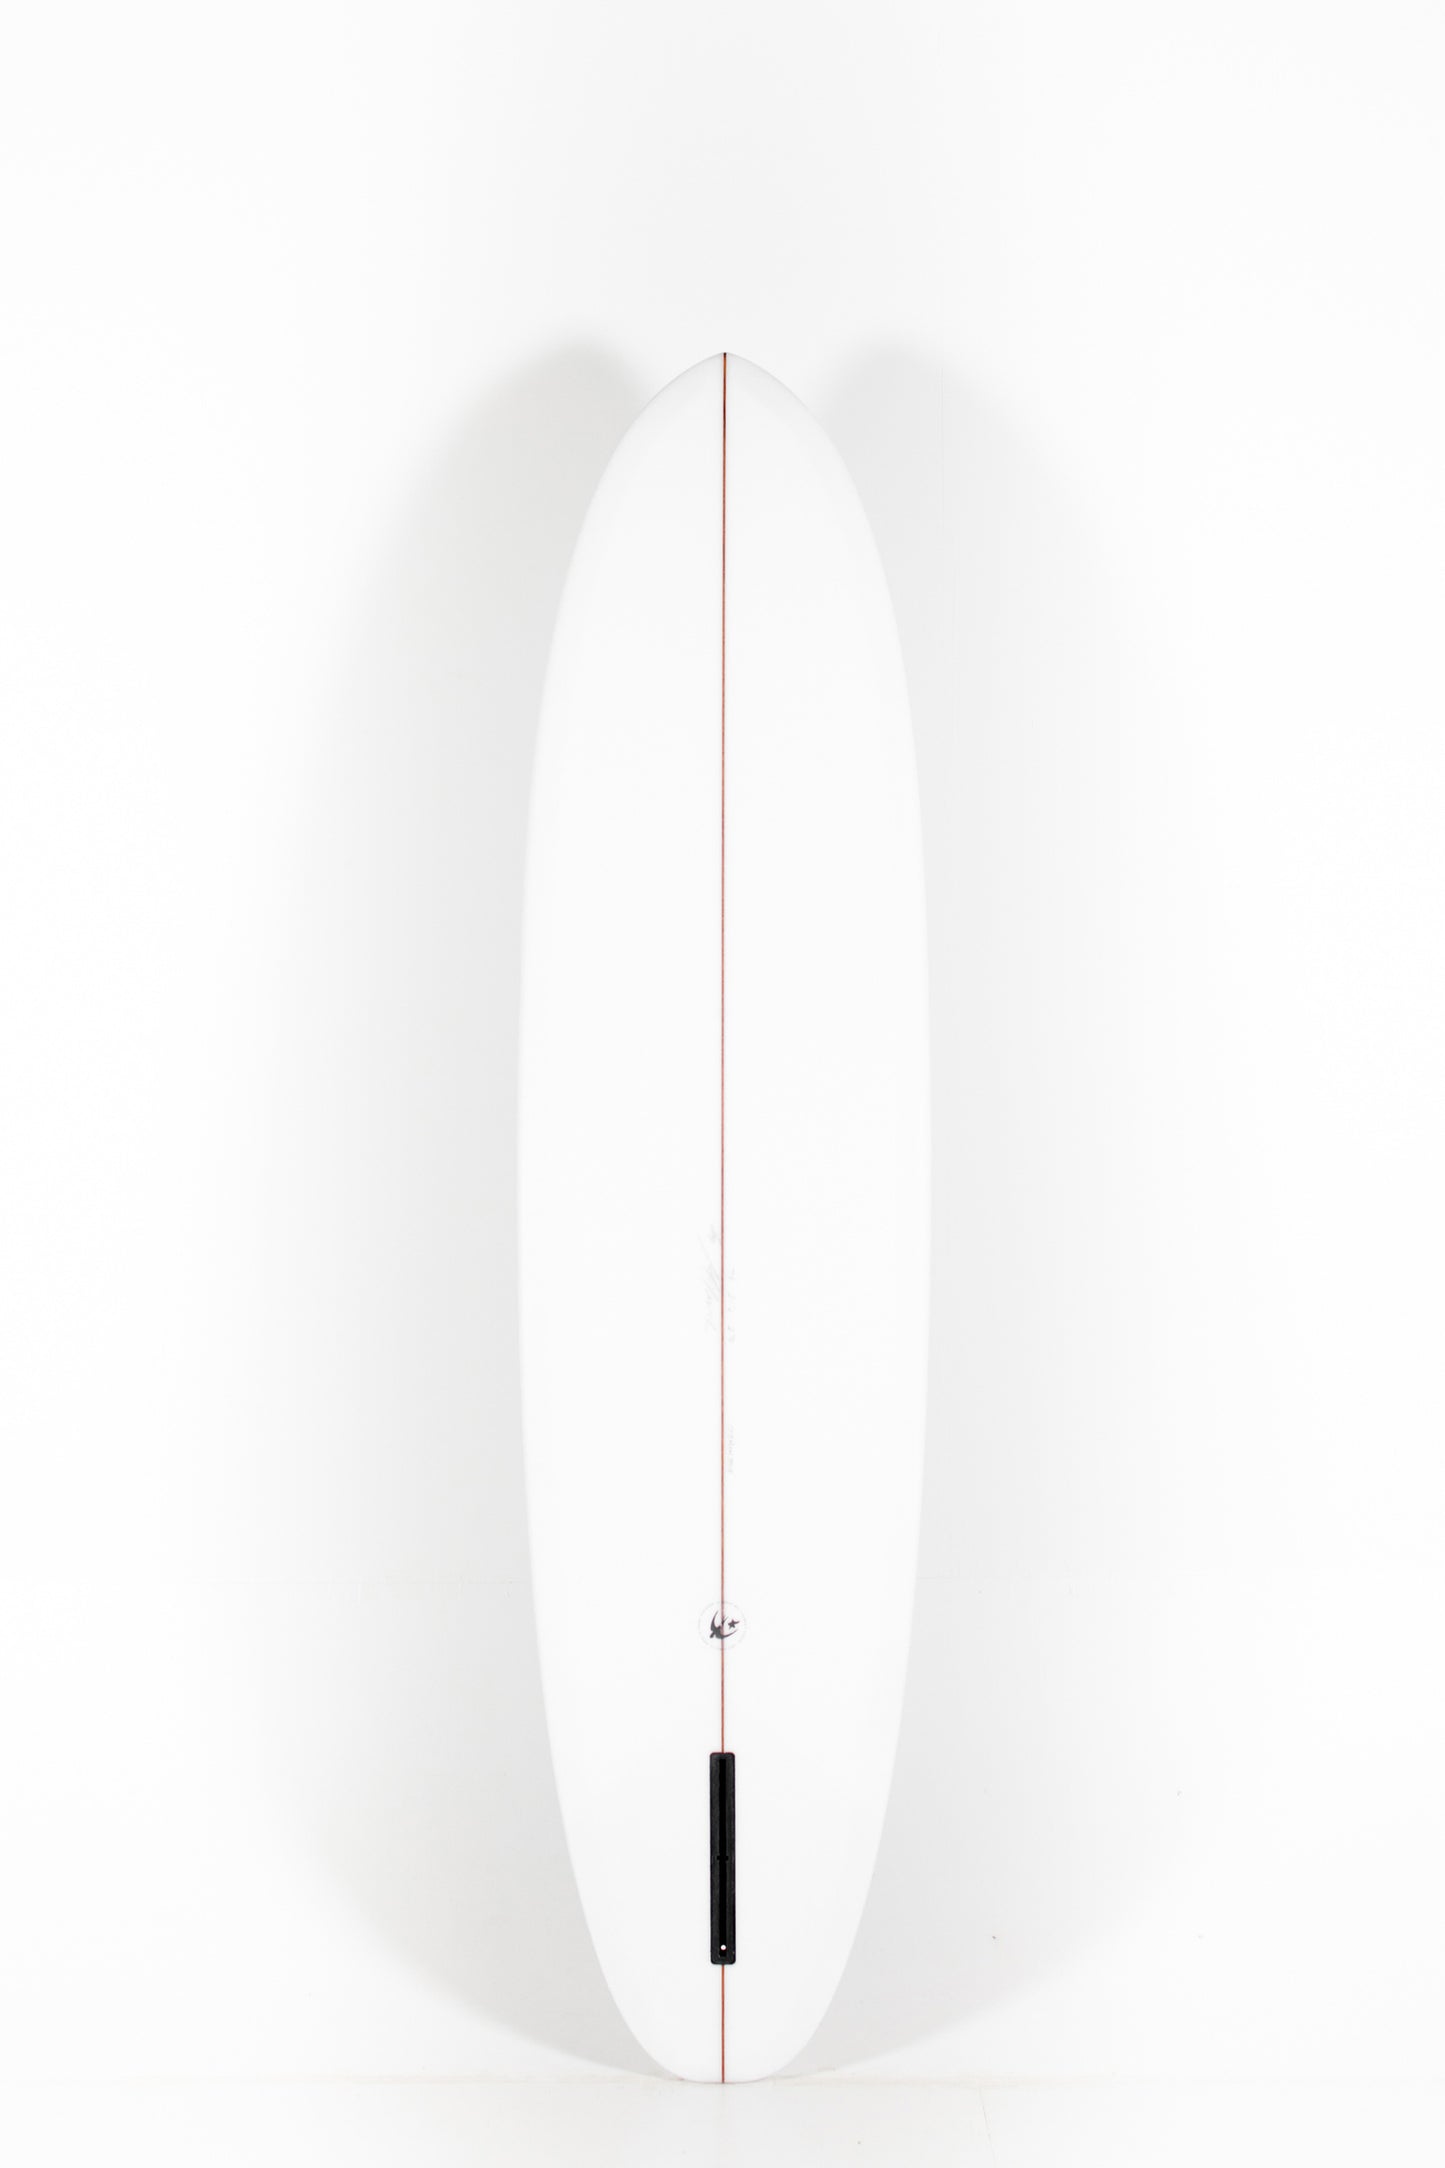 Pukas Surf Shop - McTavish Surfboard - RINCON by Bob McTavish - 7’6” x 21 1/4 x 2 7/8 - BM00745